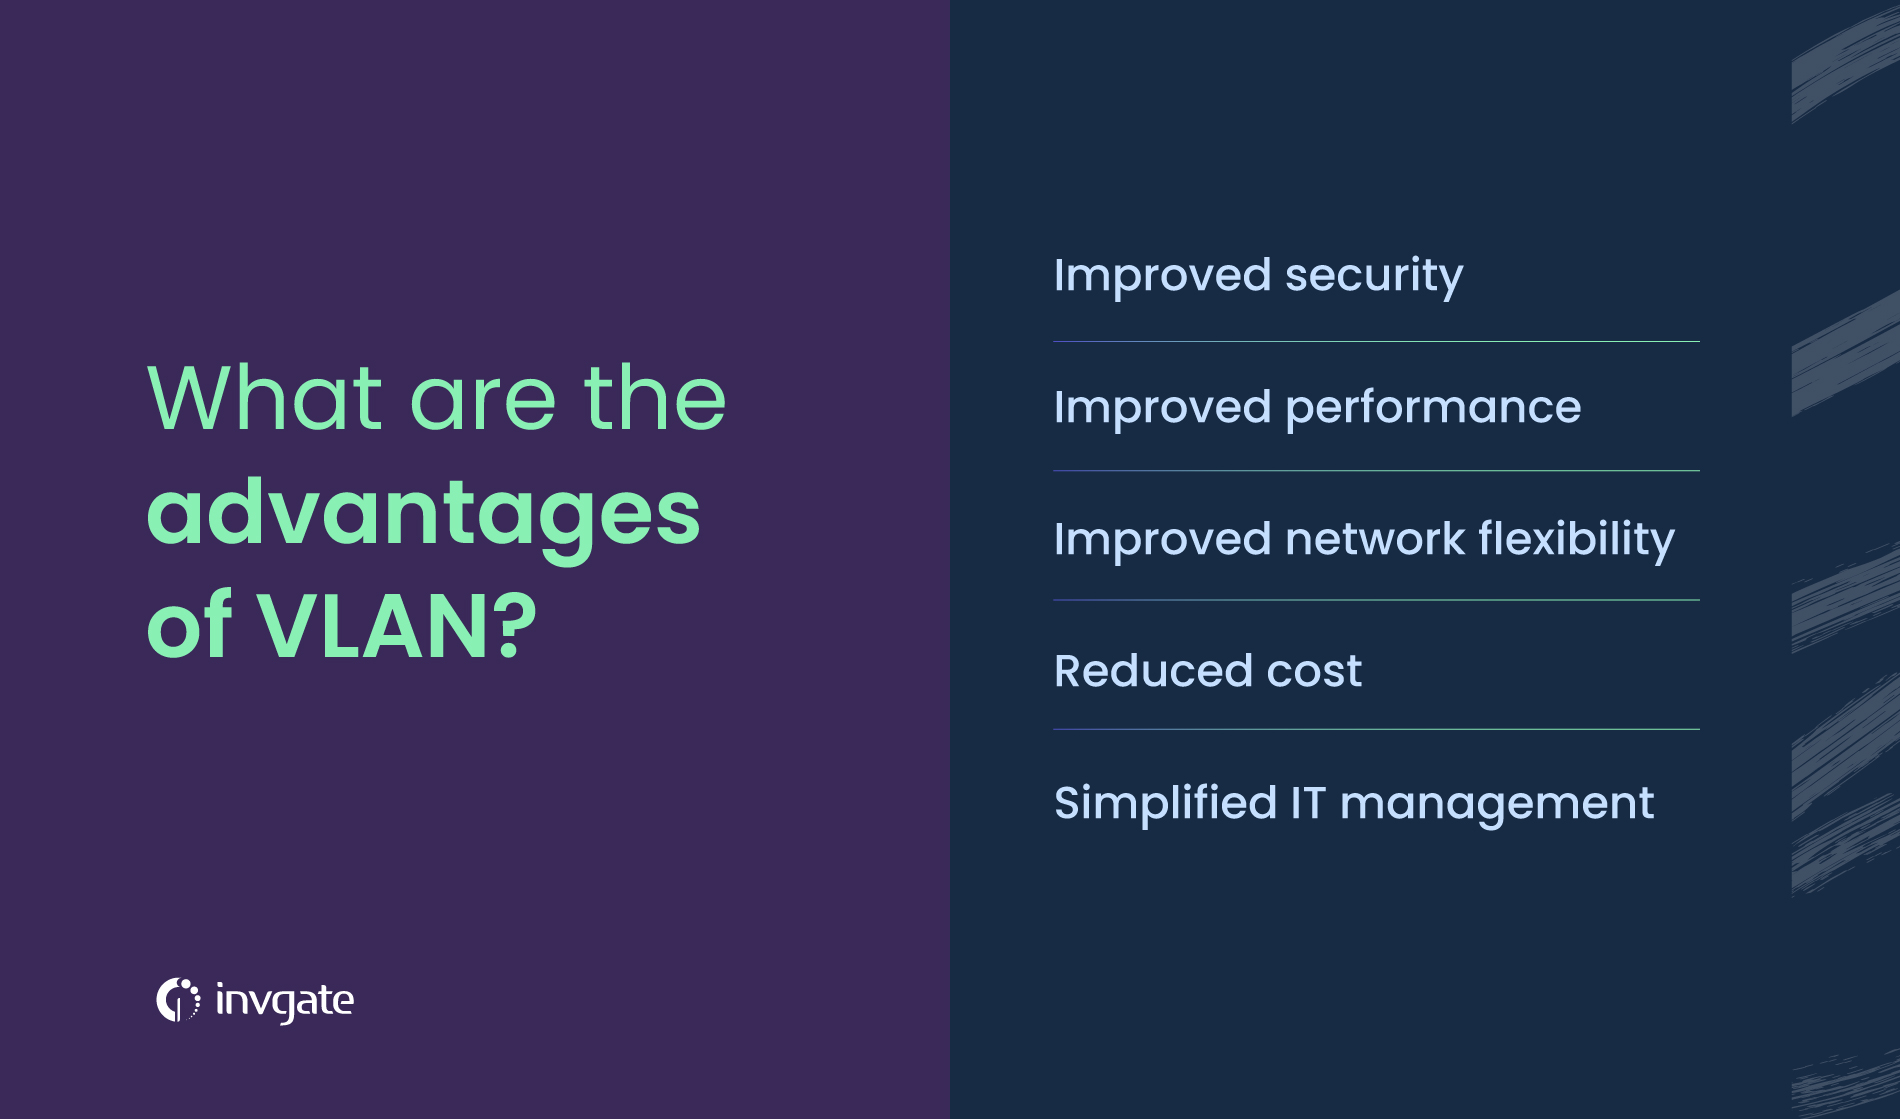 5 advantages of VLAN.